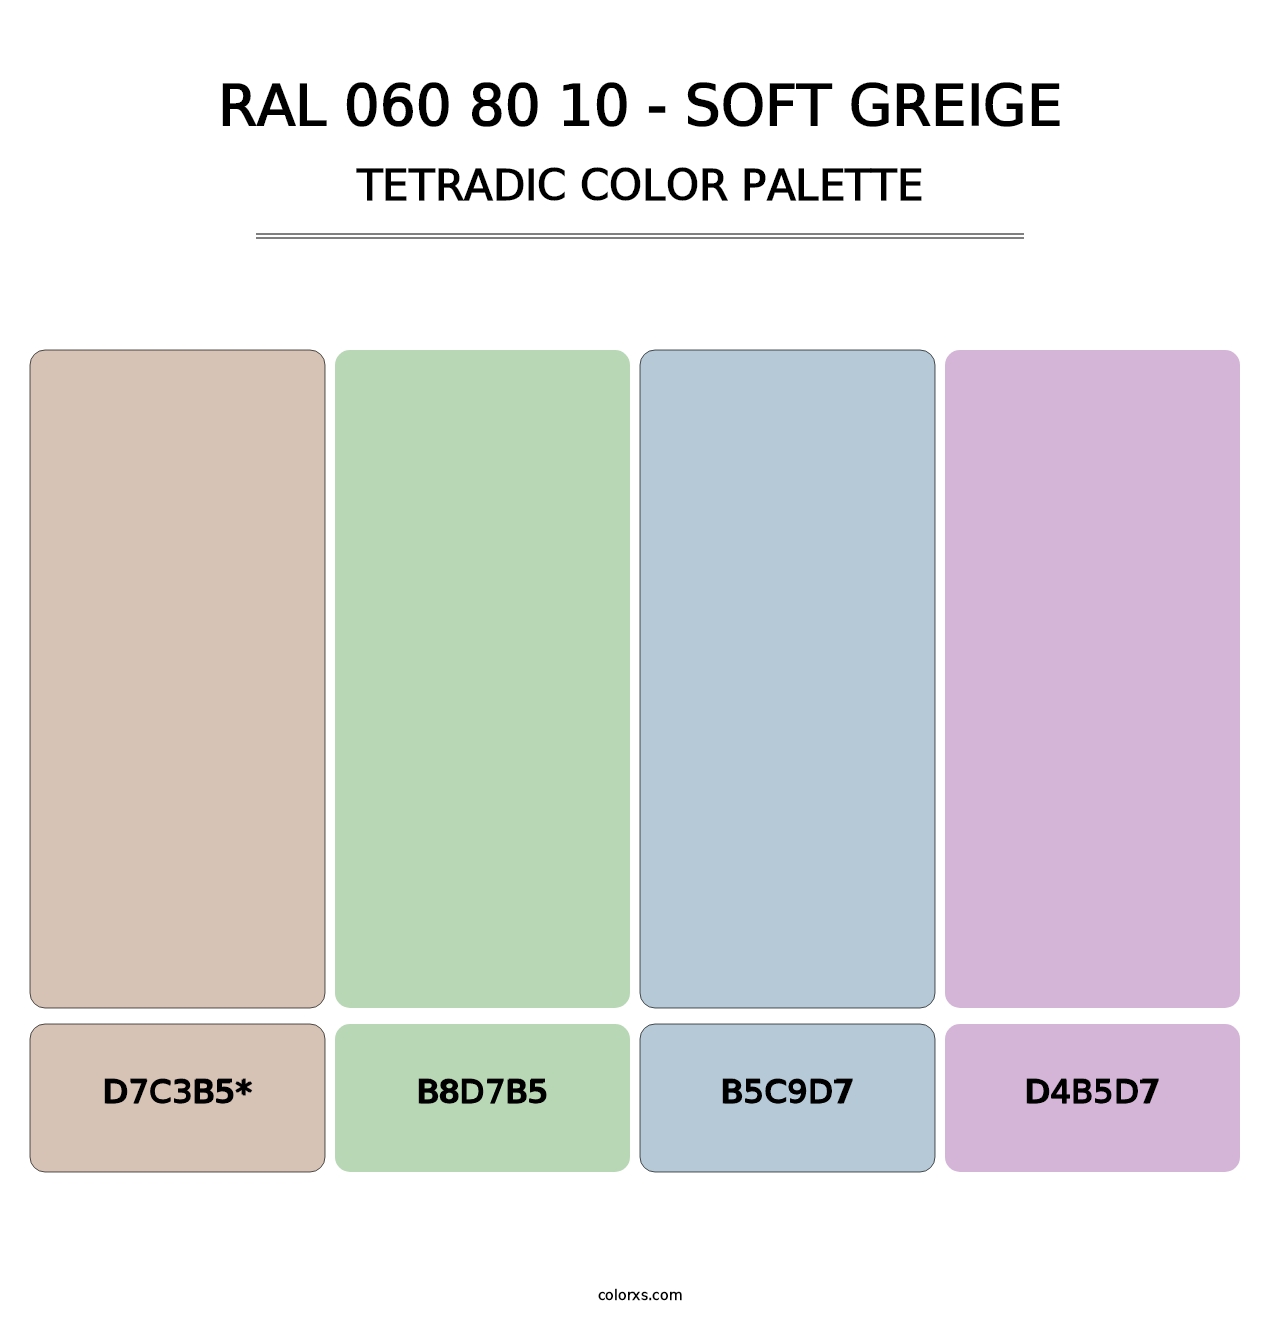 RAL 060 80 10 - Soft Greige - Tetradic Color Palette